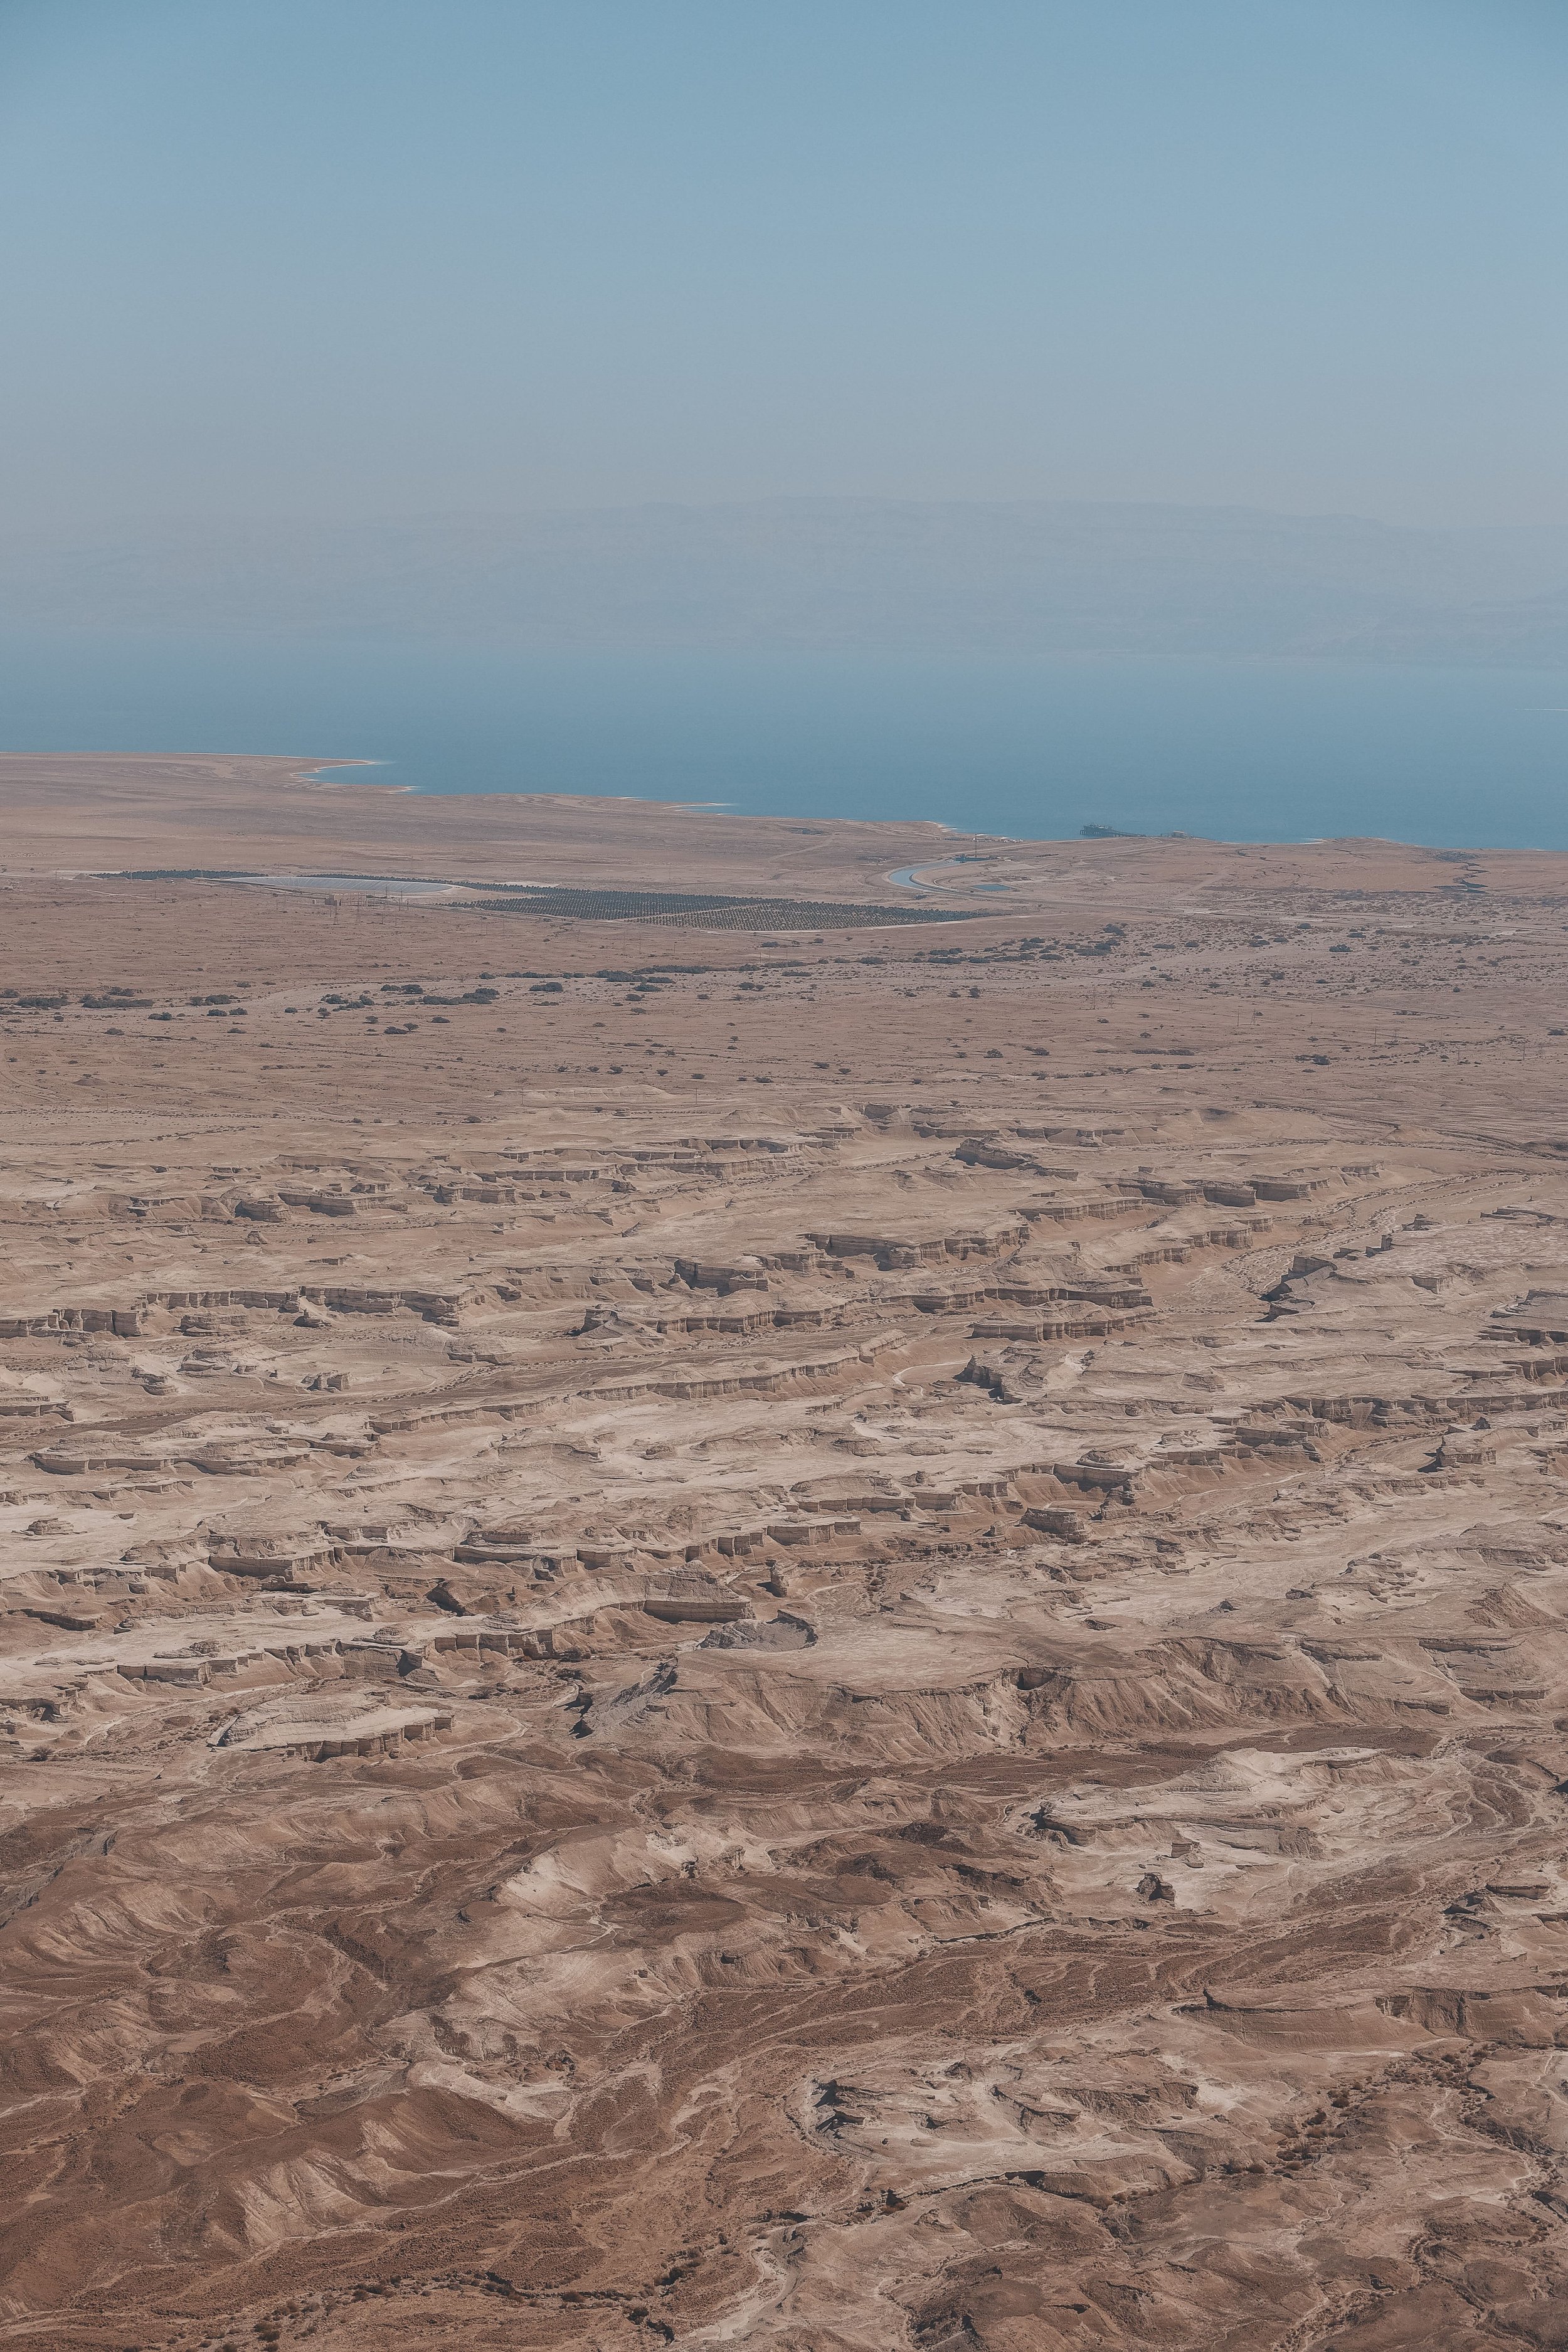 Desert for days - Masada - Dead Sea - Israel